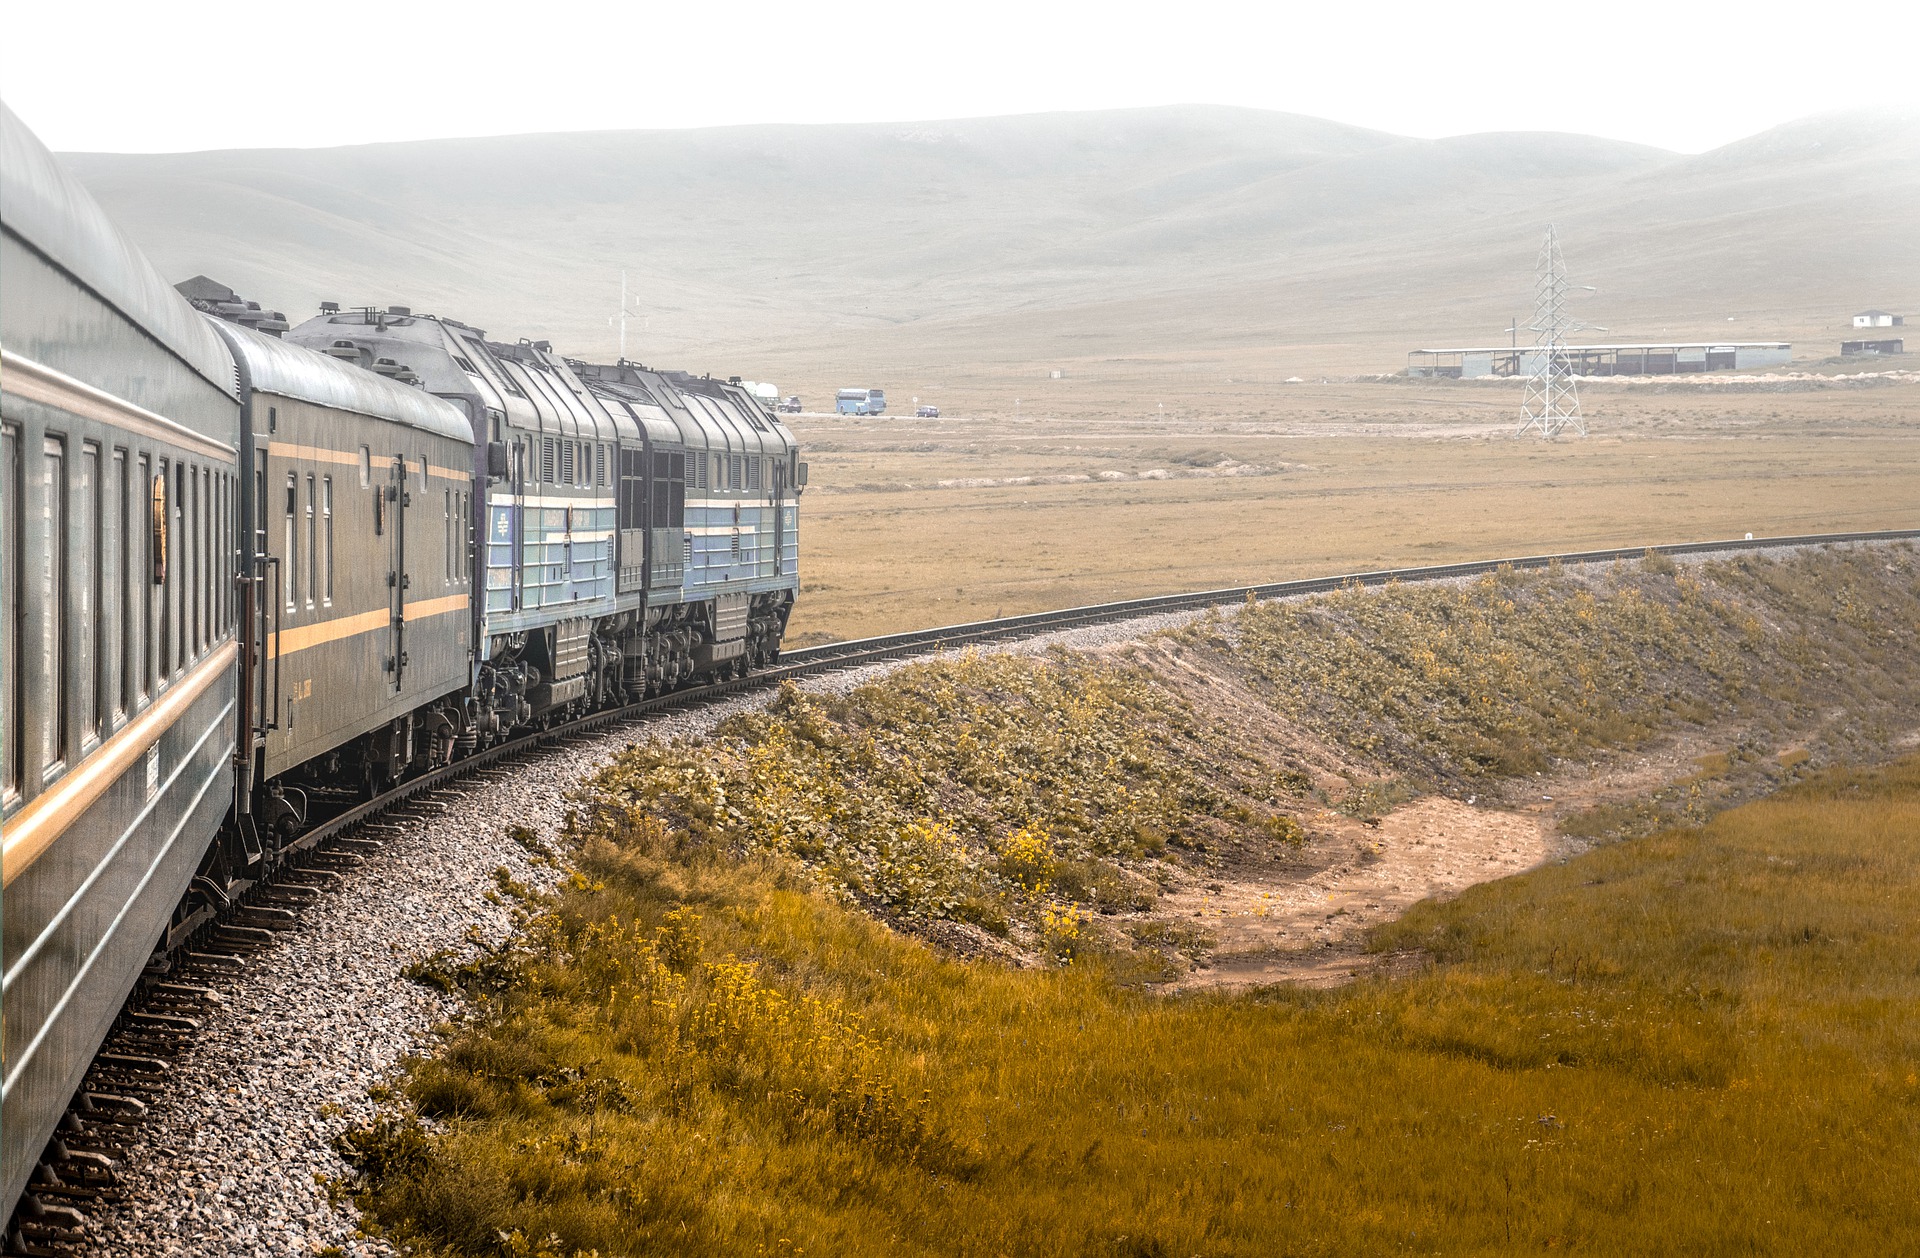 Train travel in Mongolia: Journey on the Trans-Siberian Railway